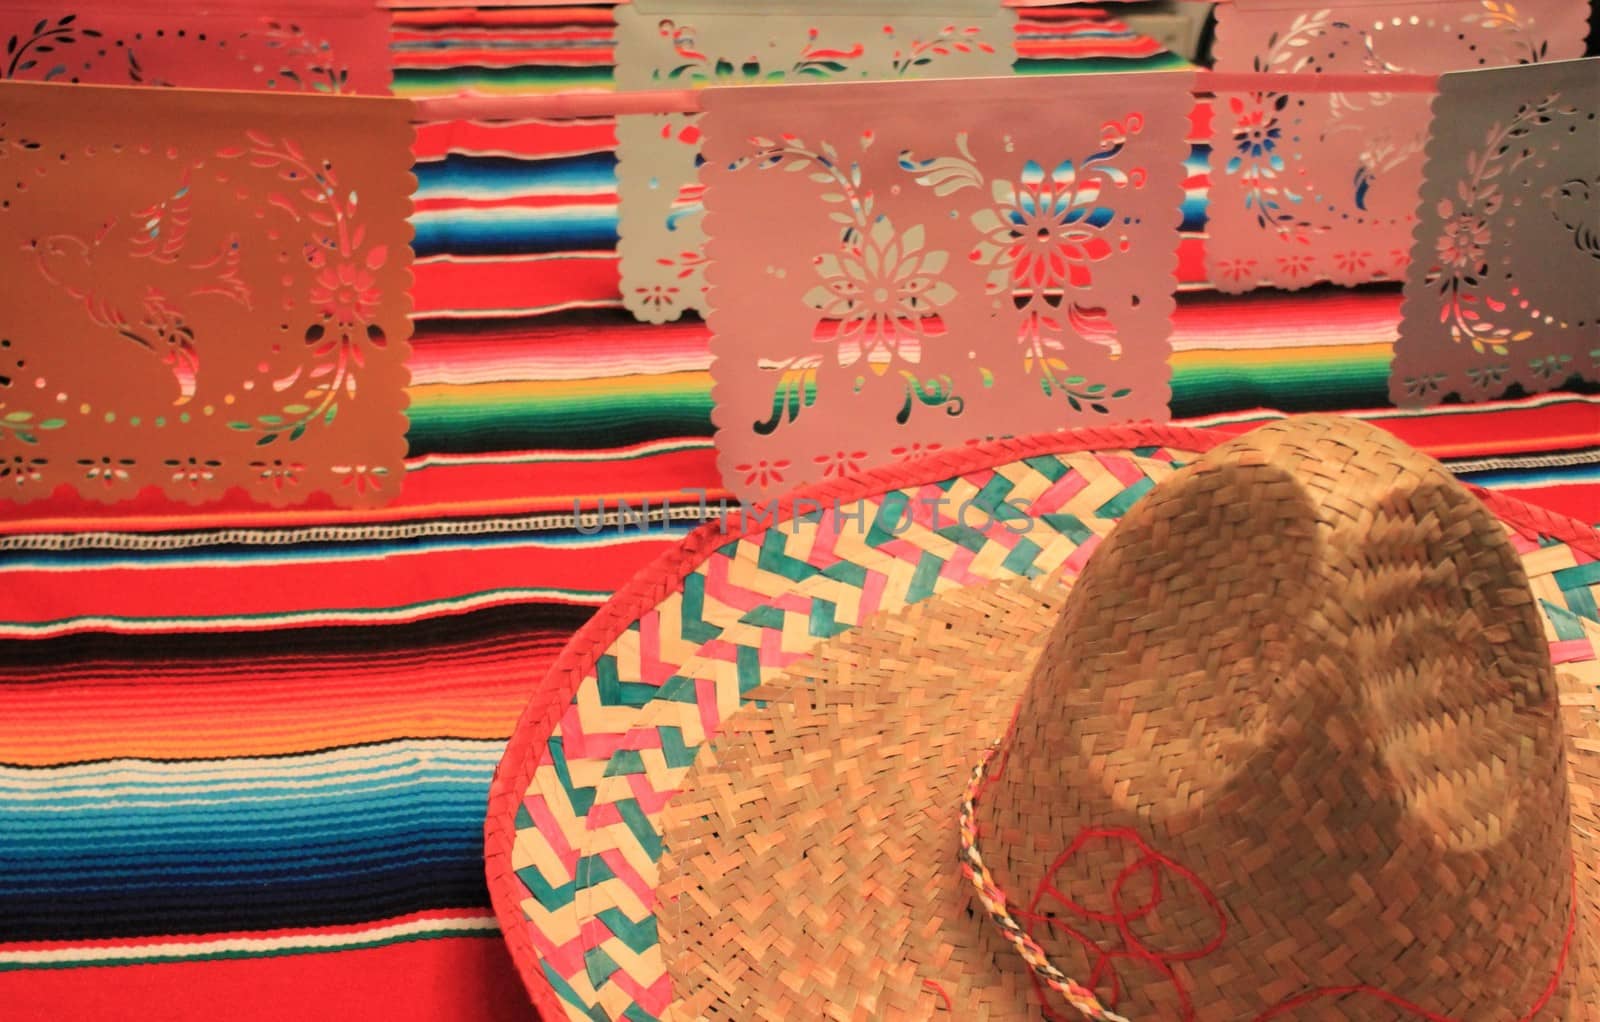 Mexico poncho sombrero background fiesta cinco de mayo decoration bunting  by cheekylorns